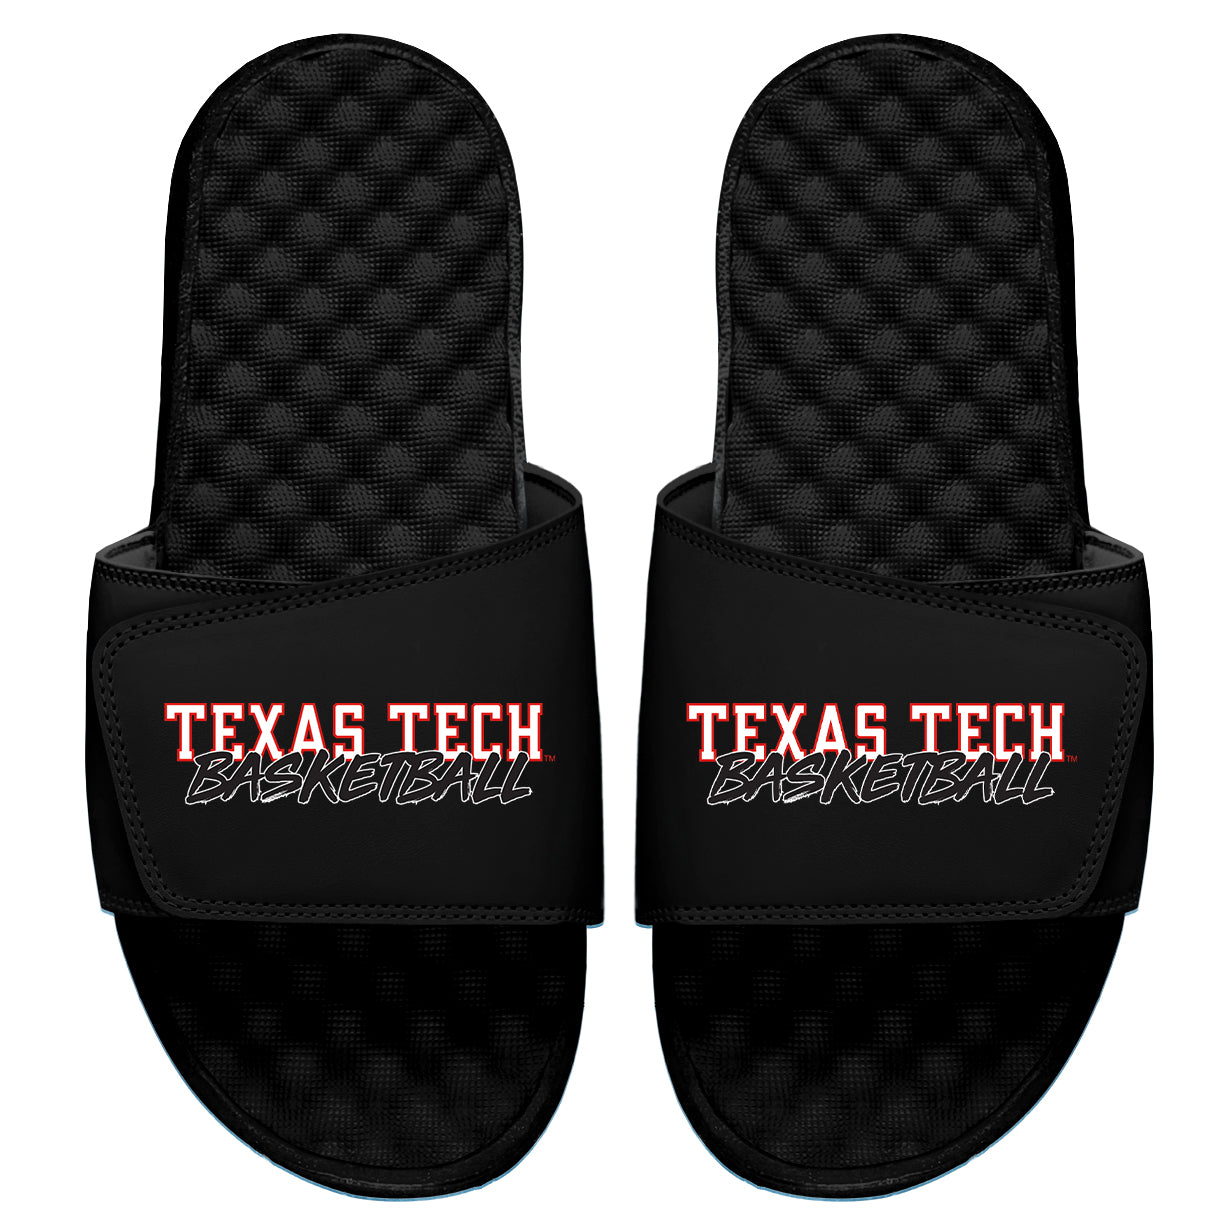 Texas Tech Basketball Slides